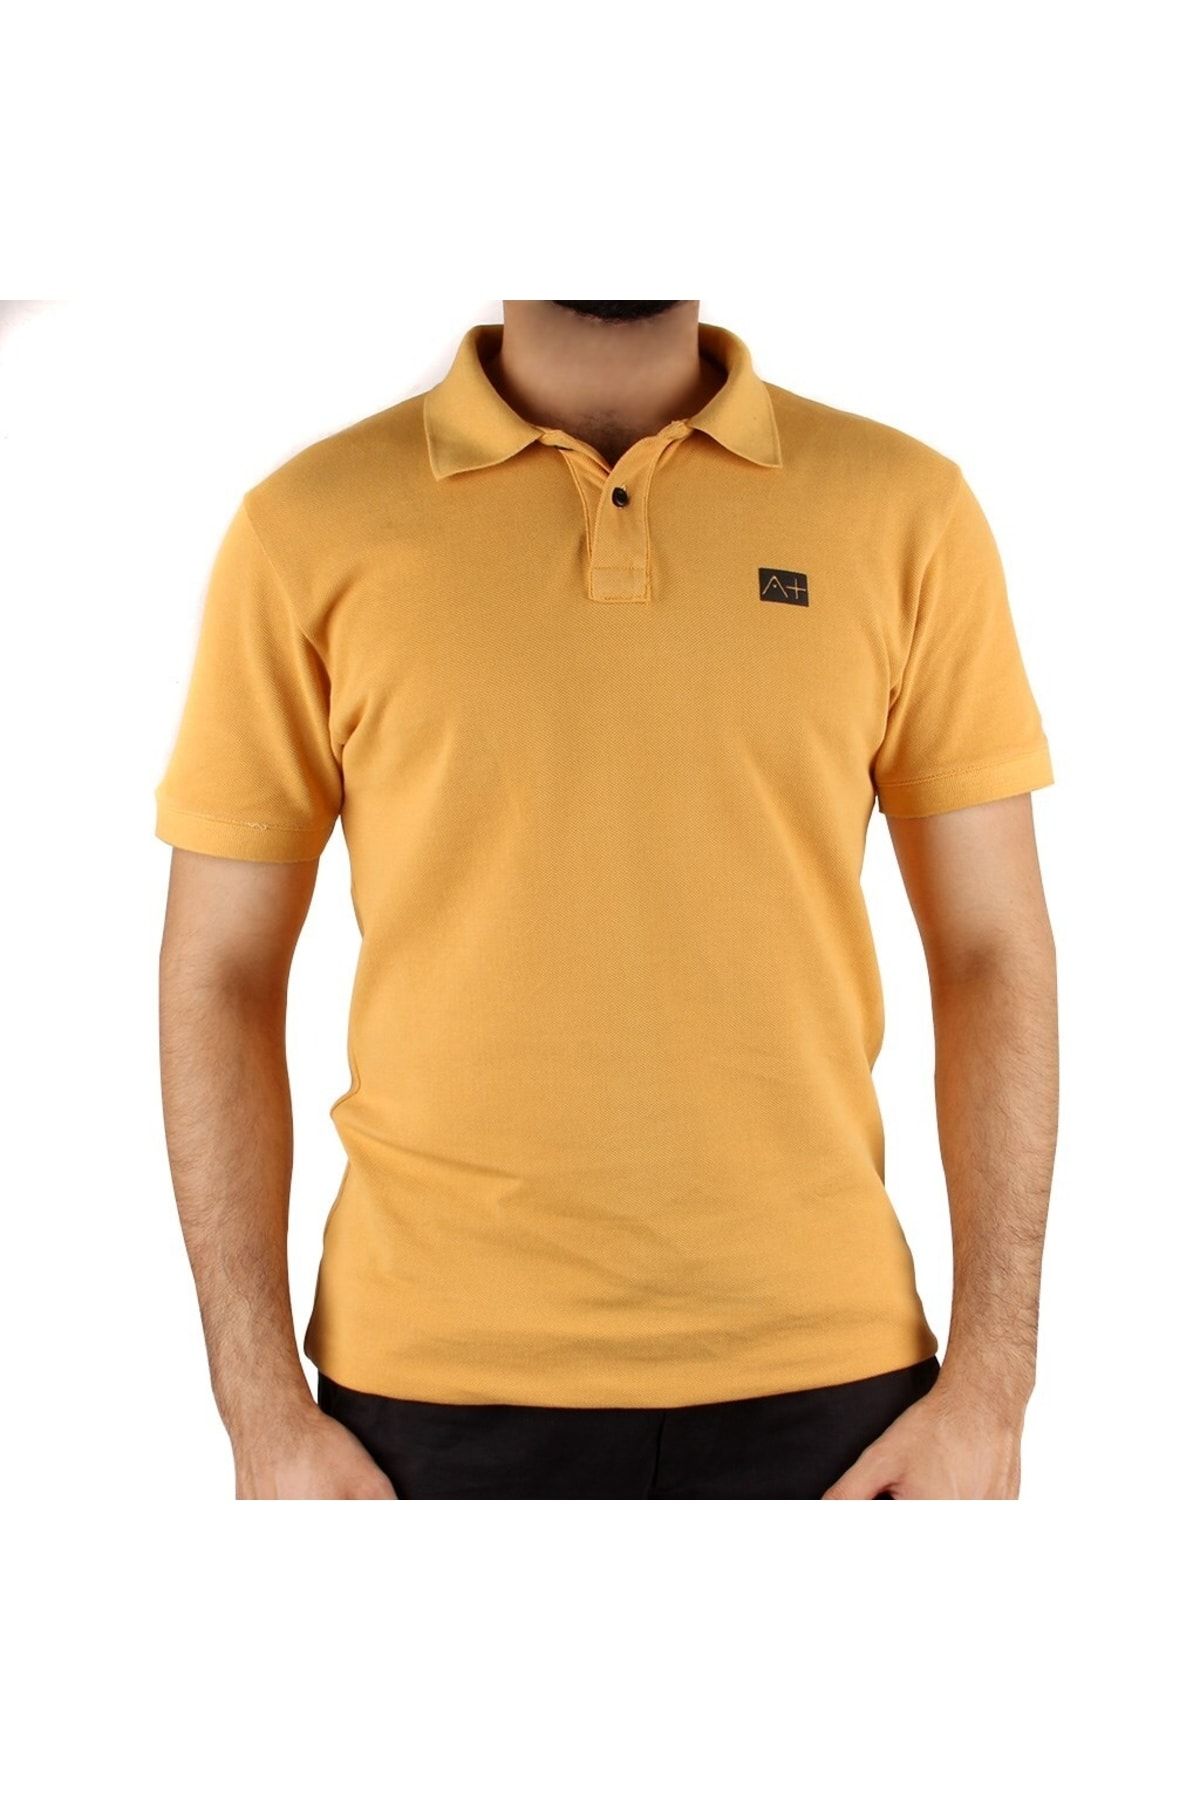 Sail Lakers A+ Naples Erkek Sarı Renk Polo Yaka T-shirt